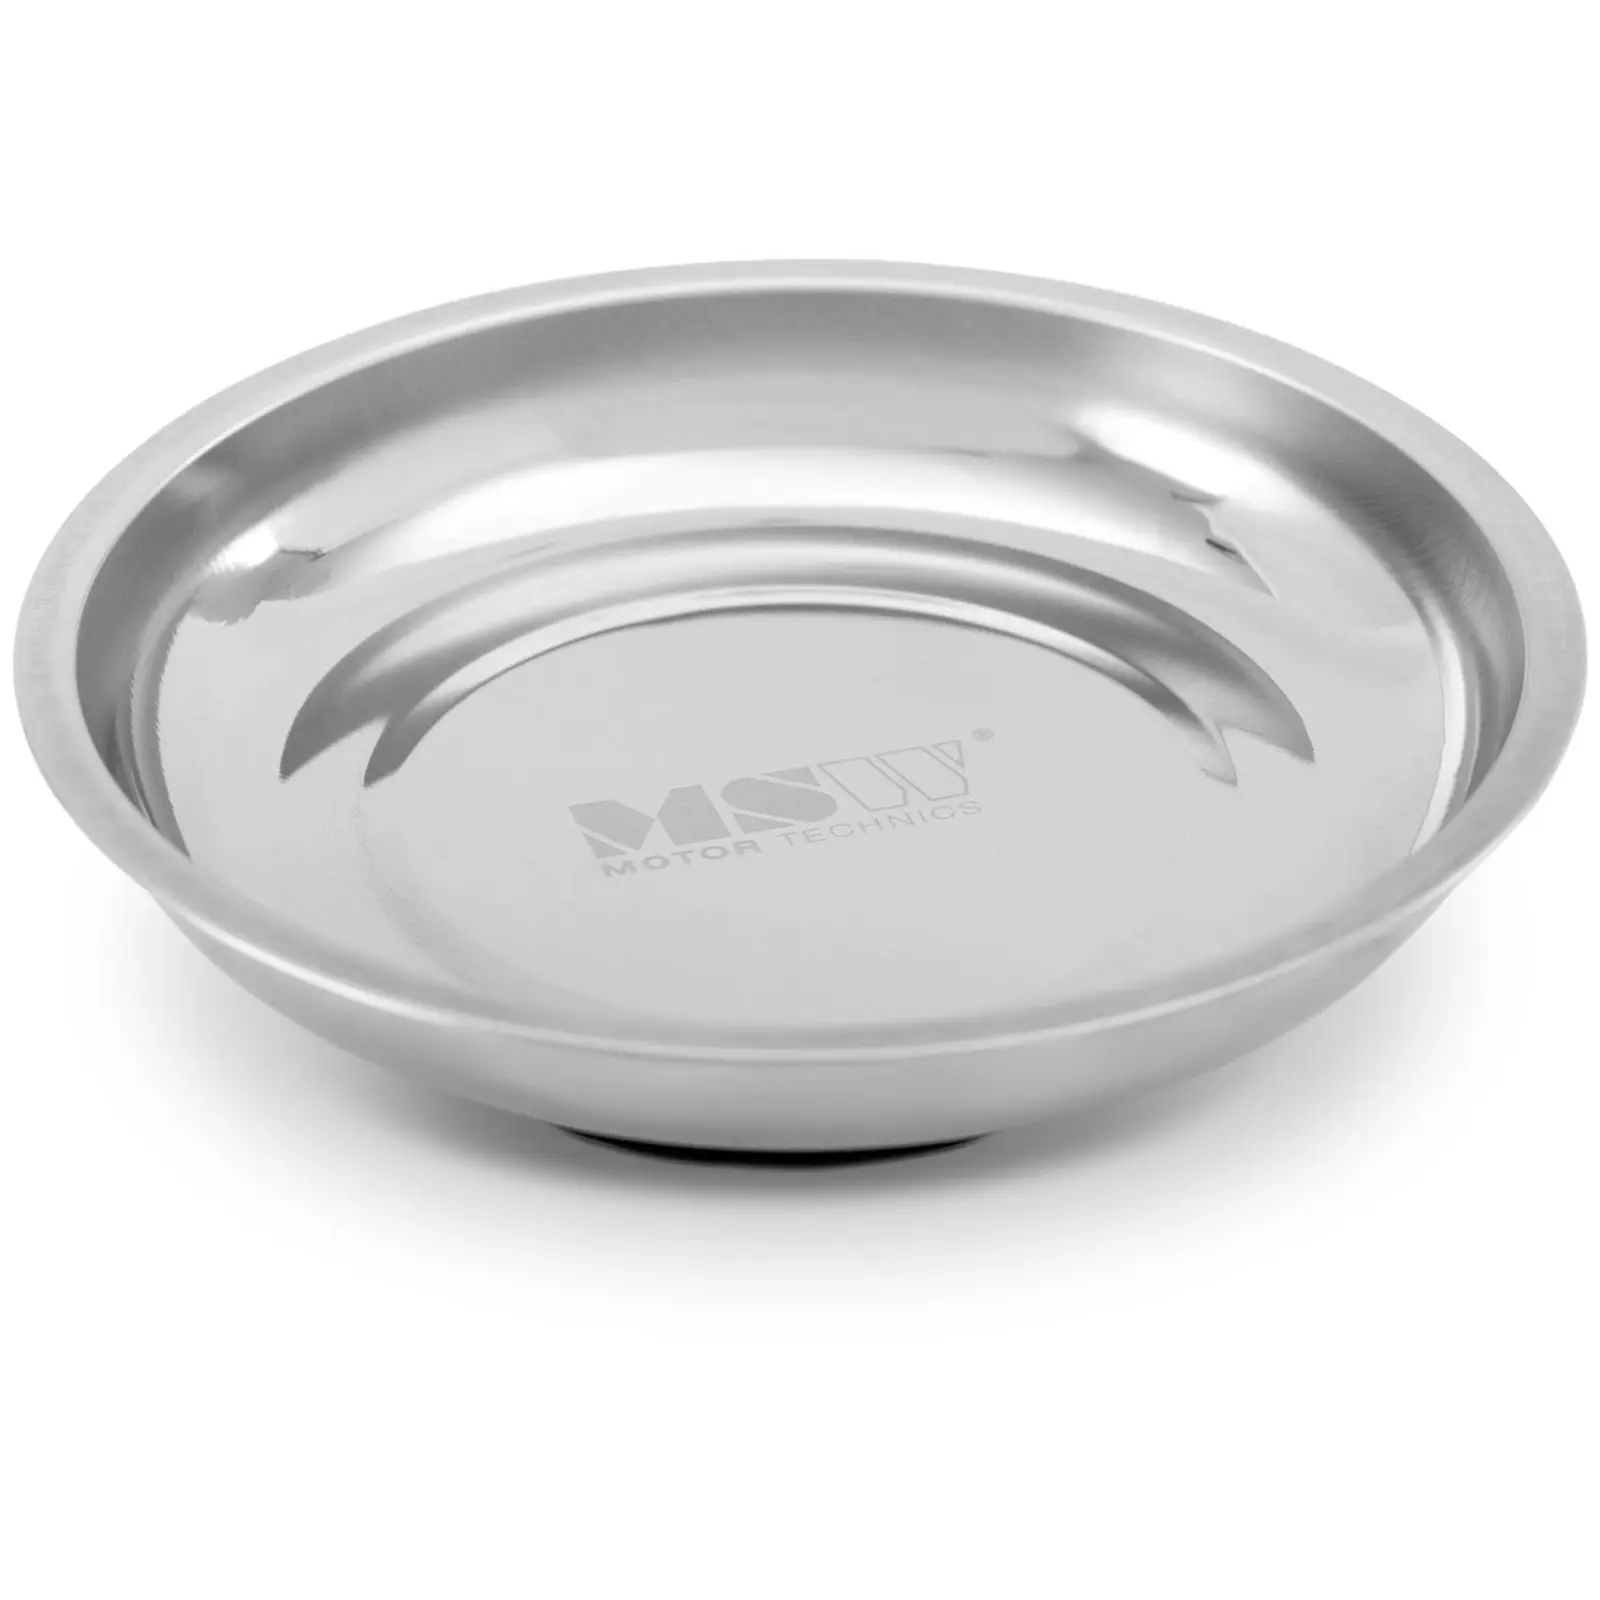 Magnet bowl - Ø 15 x 3.6 cm - ferrite magnet